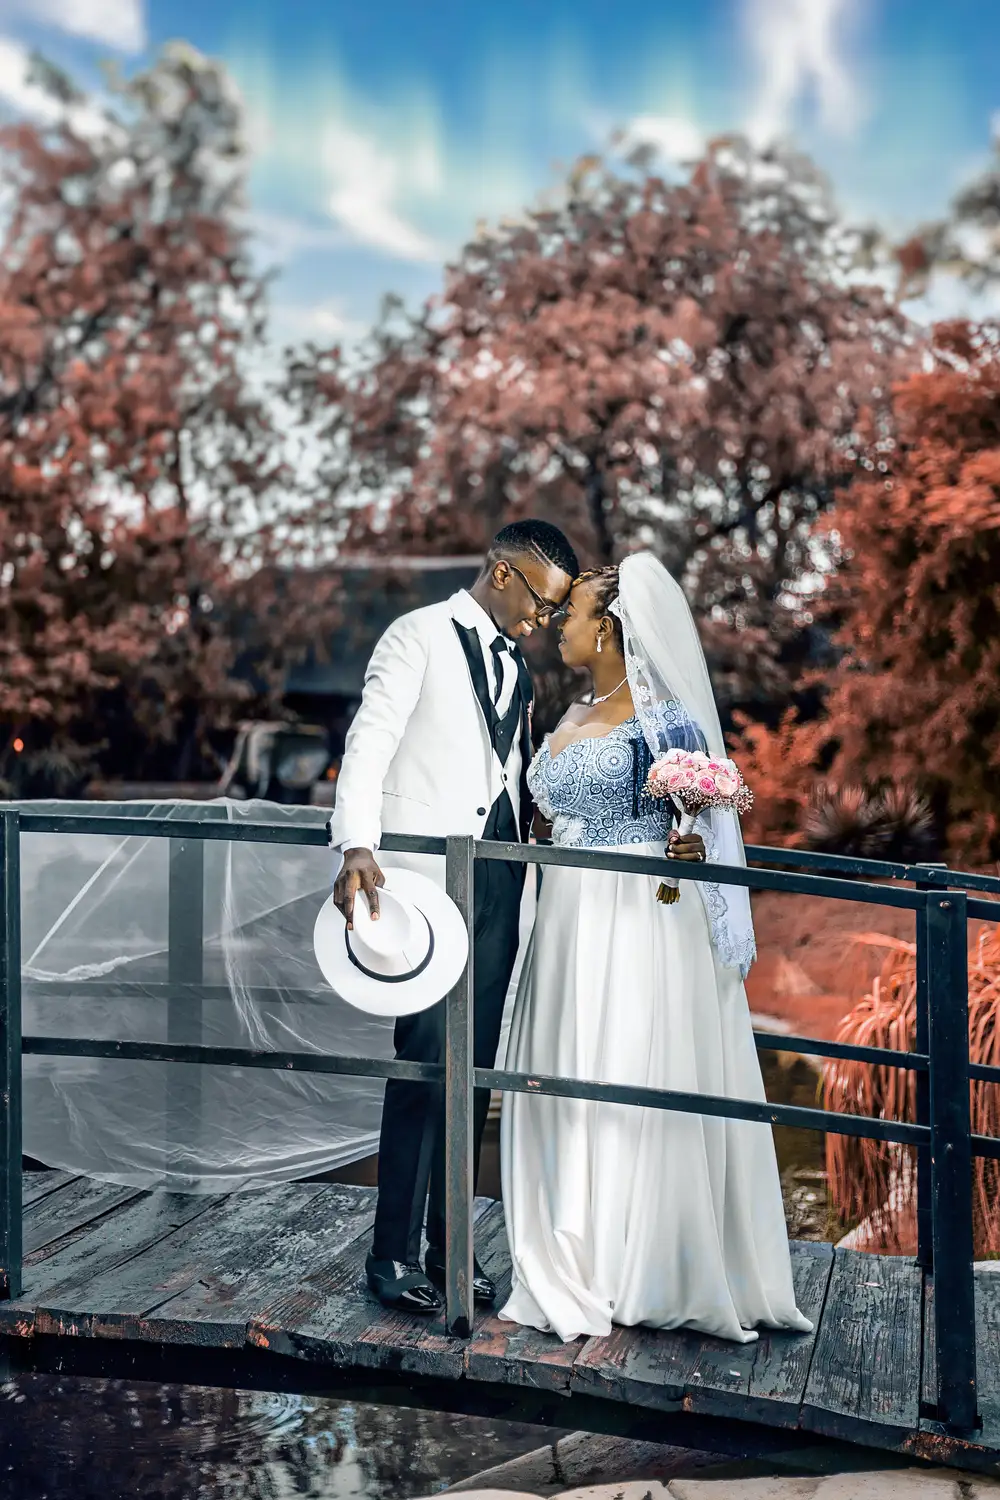 Wedded couple standing on a bridge